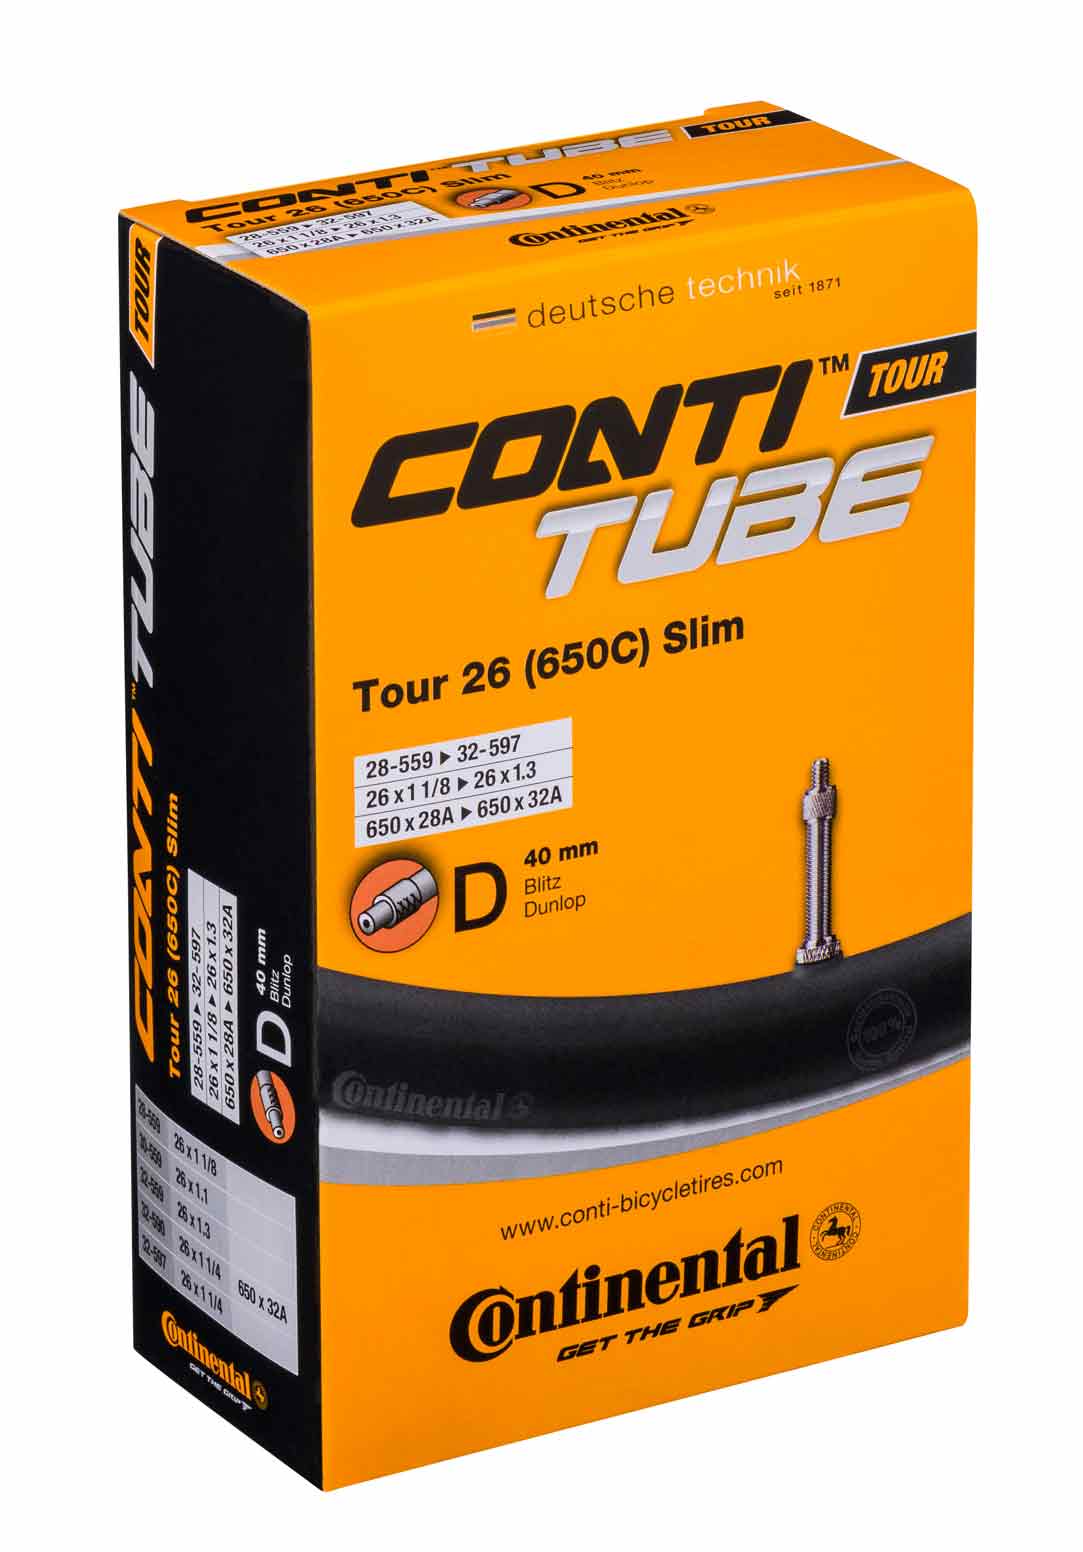 Continental Tour Tube Slim 26 - Bild 1